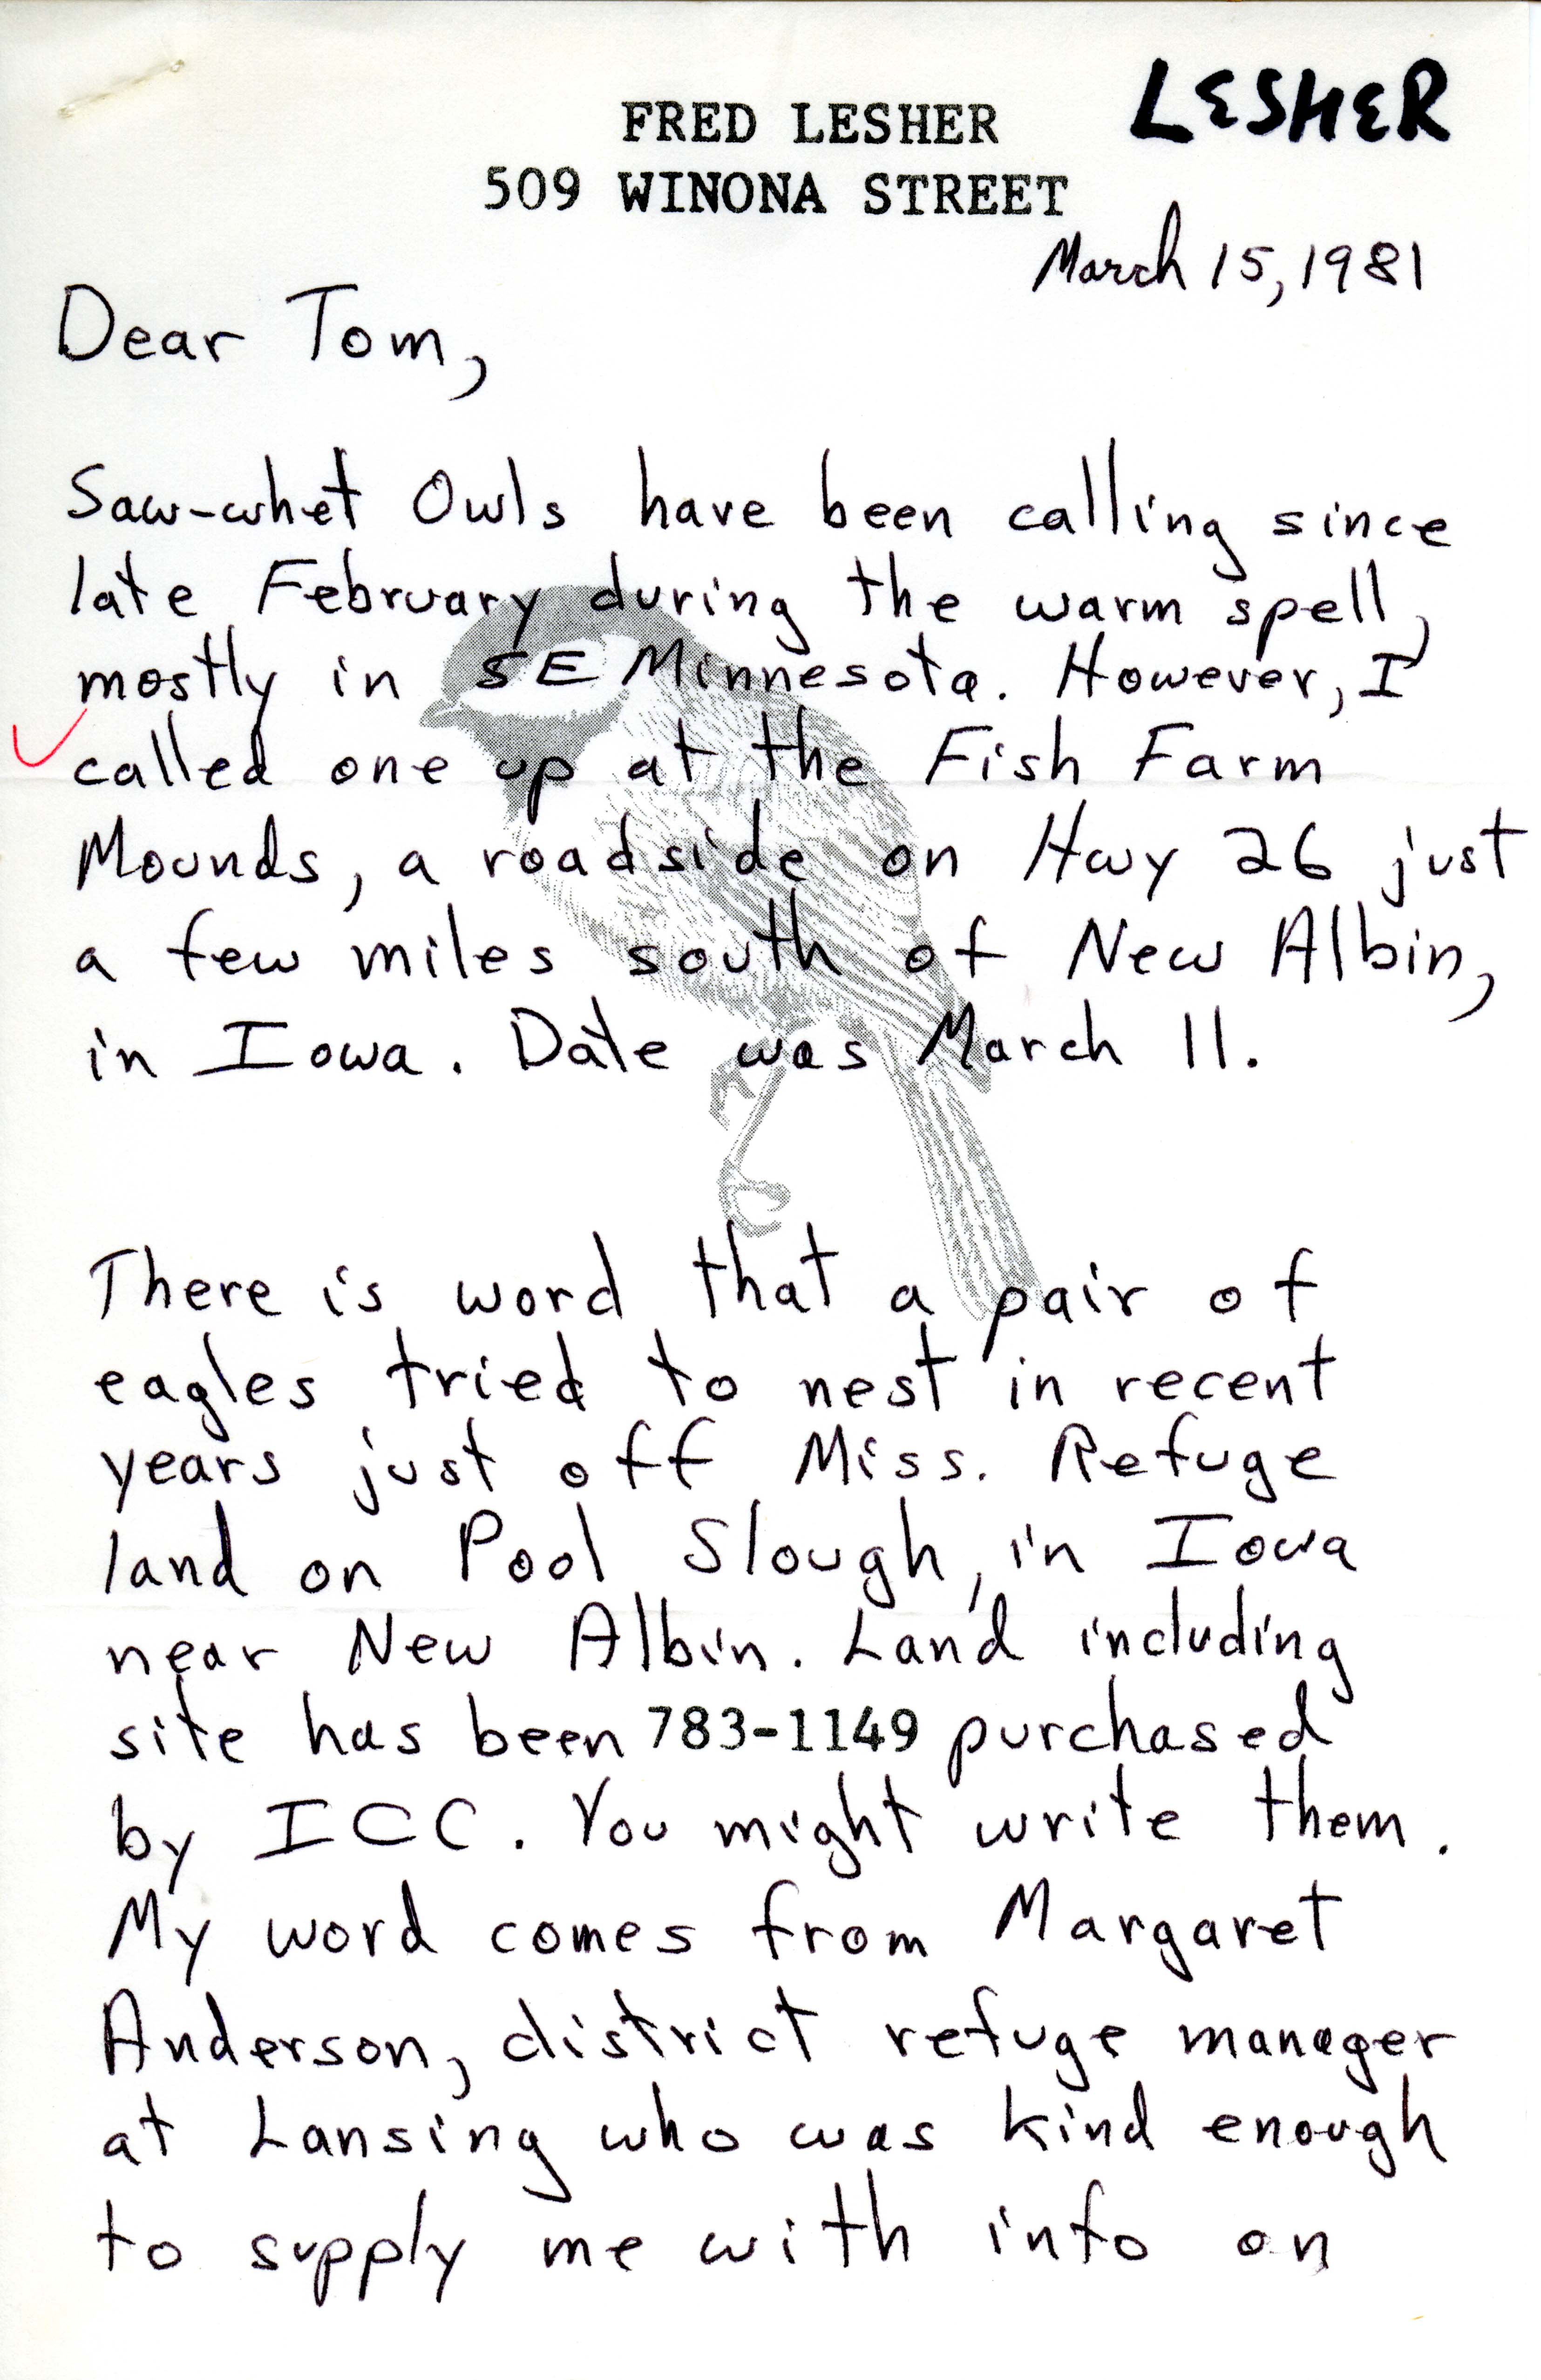 Fred Lesher letter to Thomas Kent regarding Saw-whet Owl calls, March 15, 1981